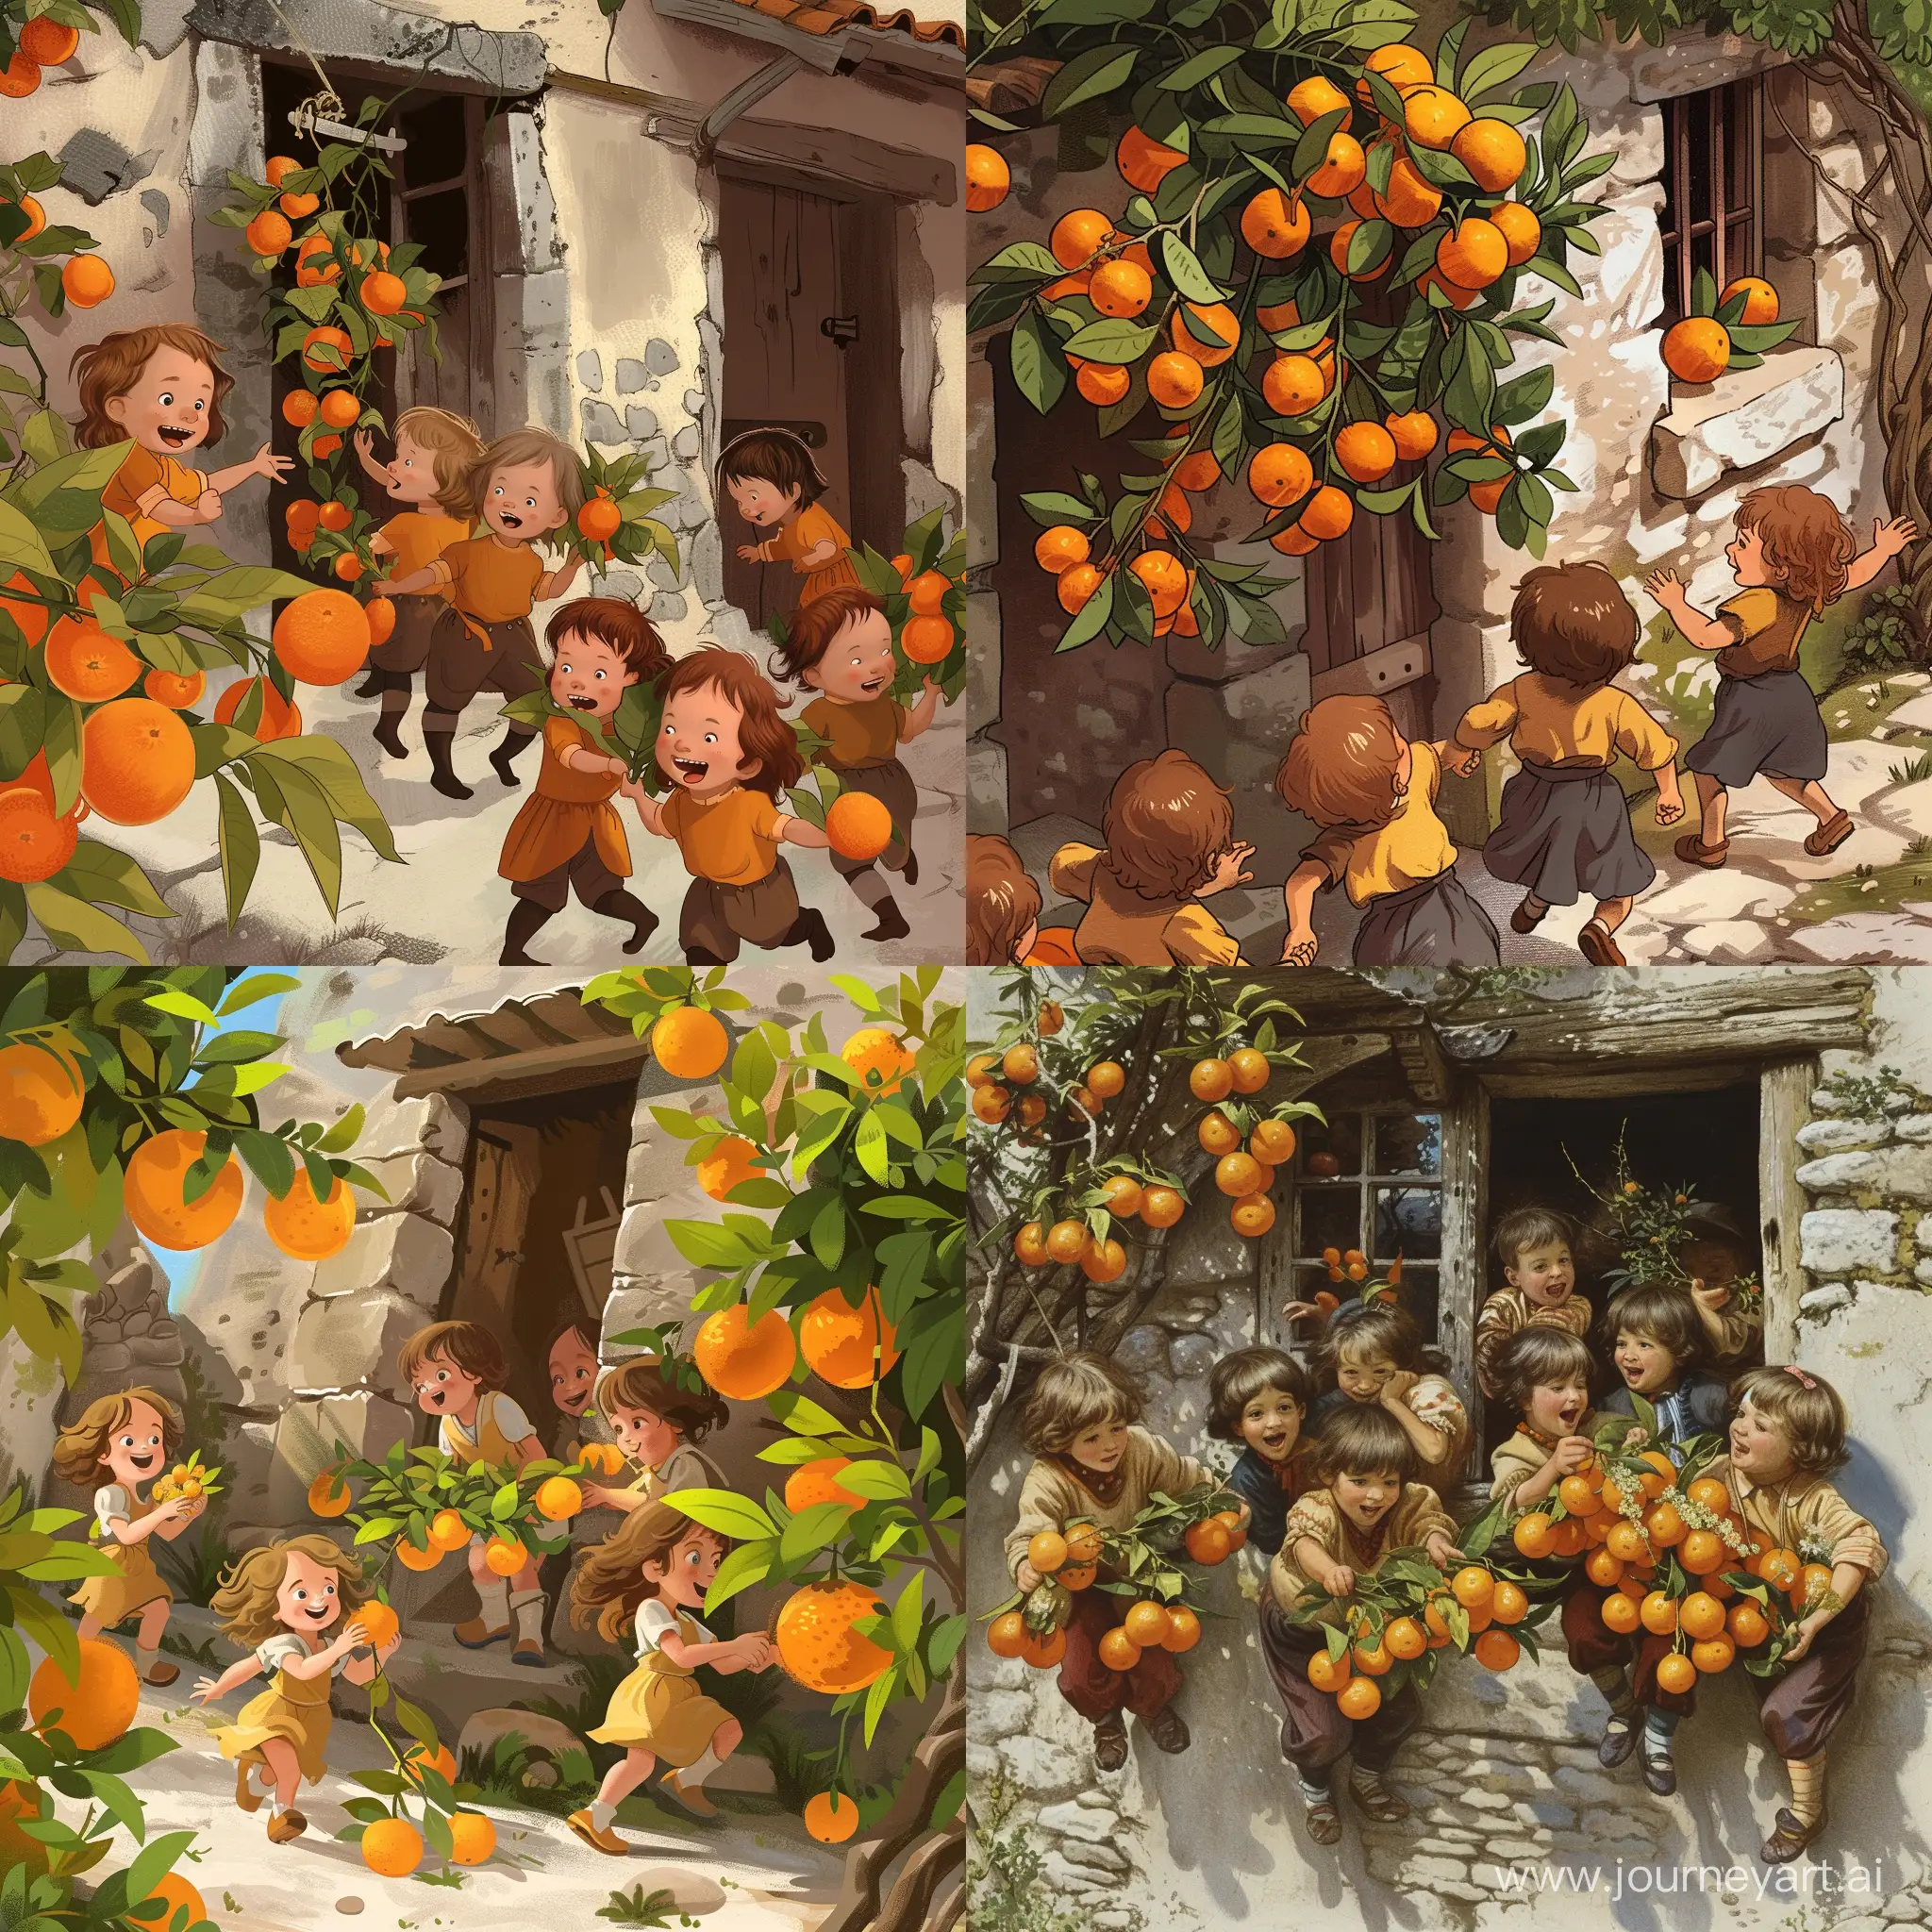 Quaint-Stone-Hovels-Joyful-Children-Offering-Flowers-and-Oranges-in-Cartoon-Style